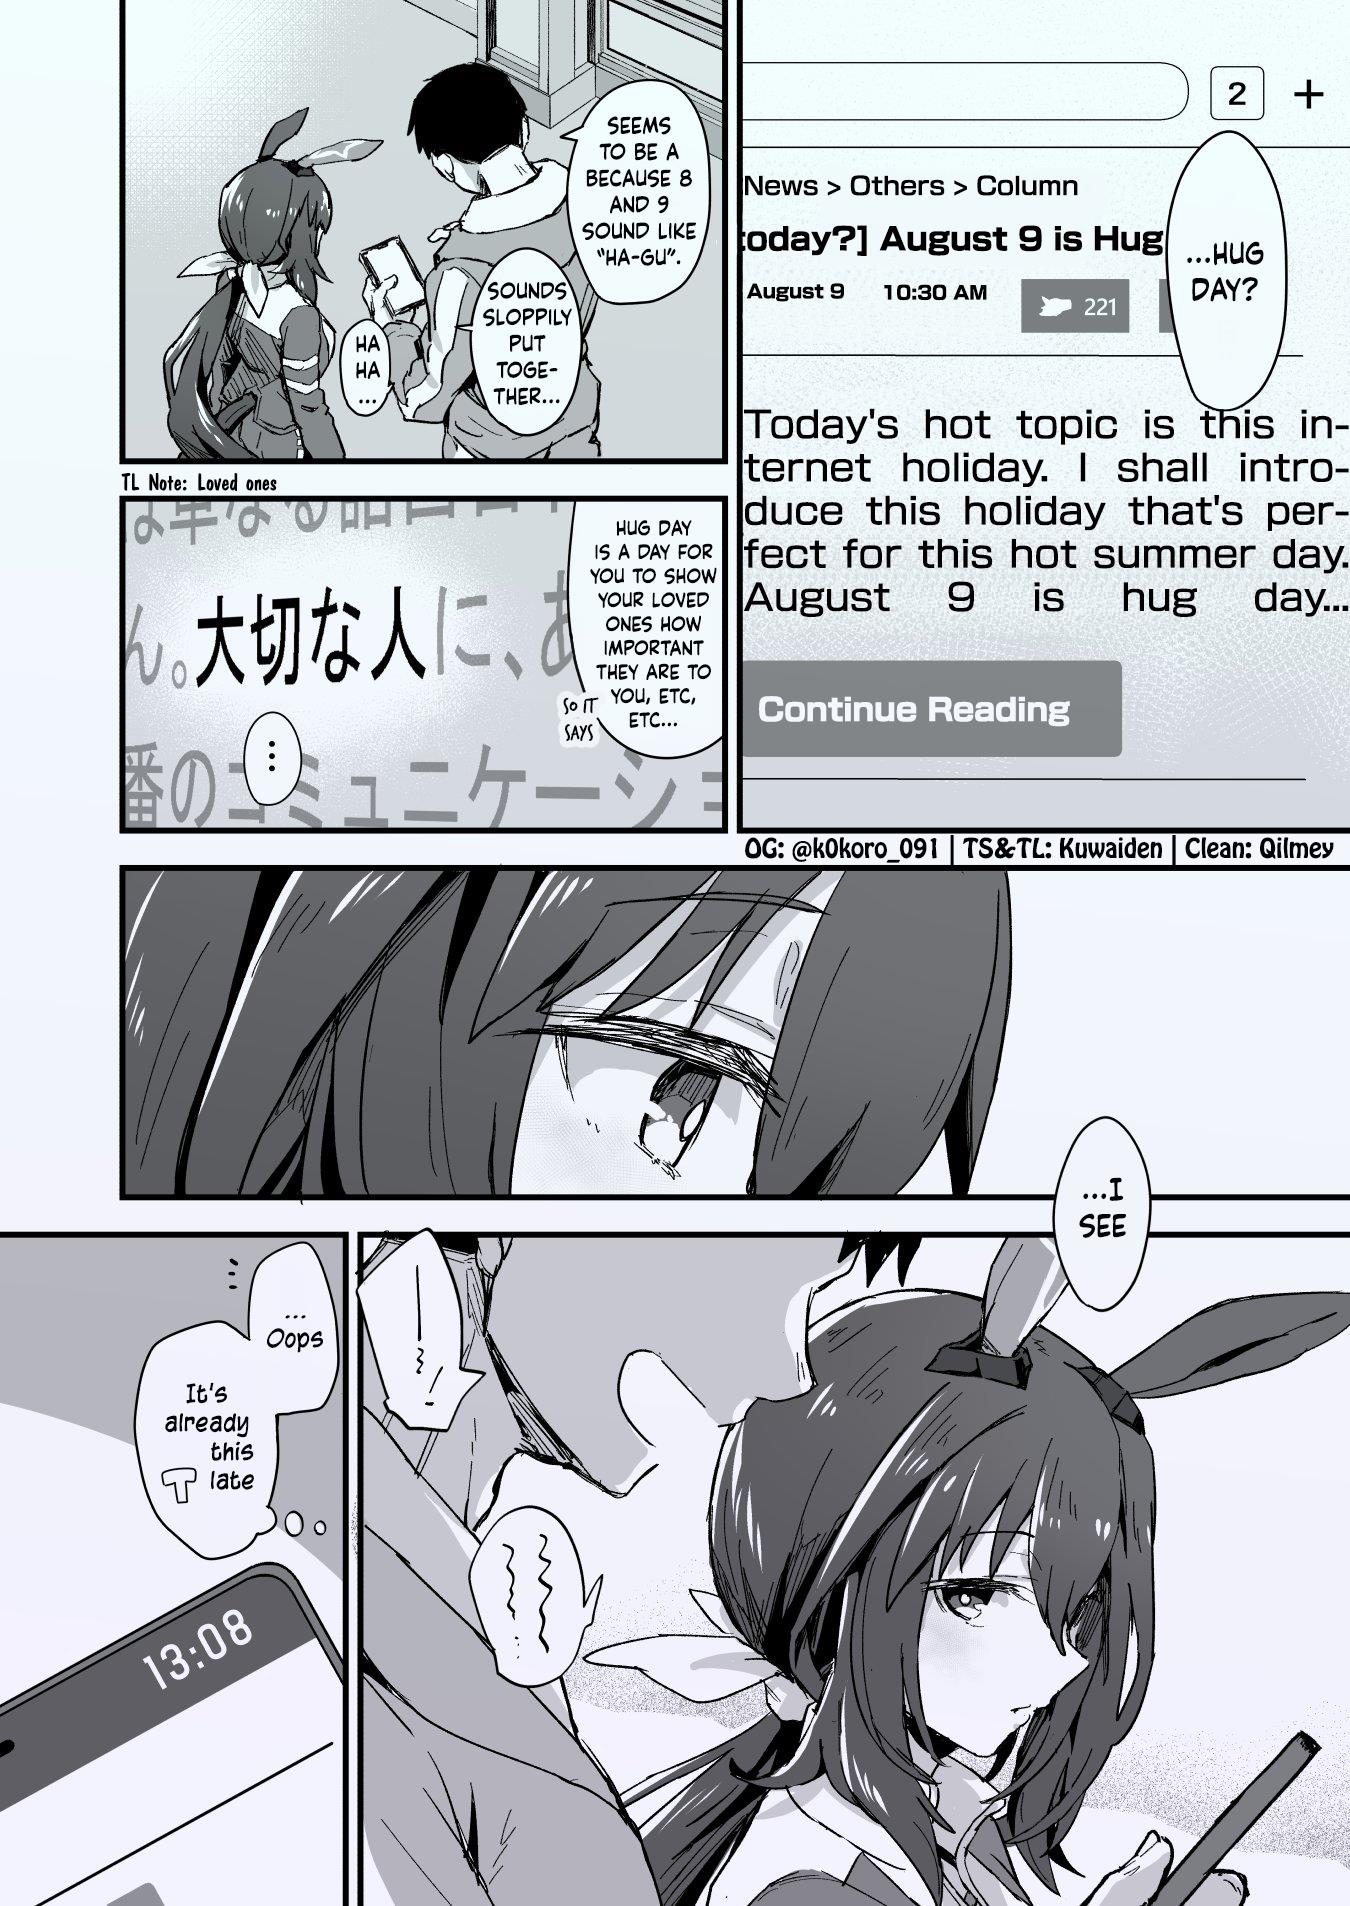 Kokoro-Sensei's Umamusume Shorts (Doujinshi) Chapter 27: Hug Day Ayabe-San Manga - Picture 2